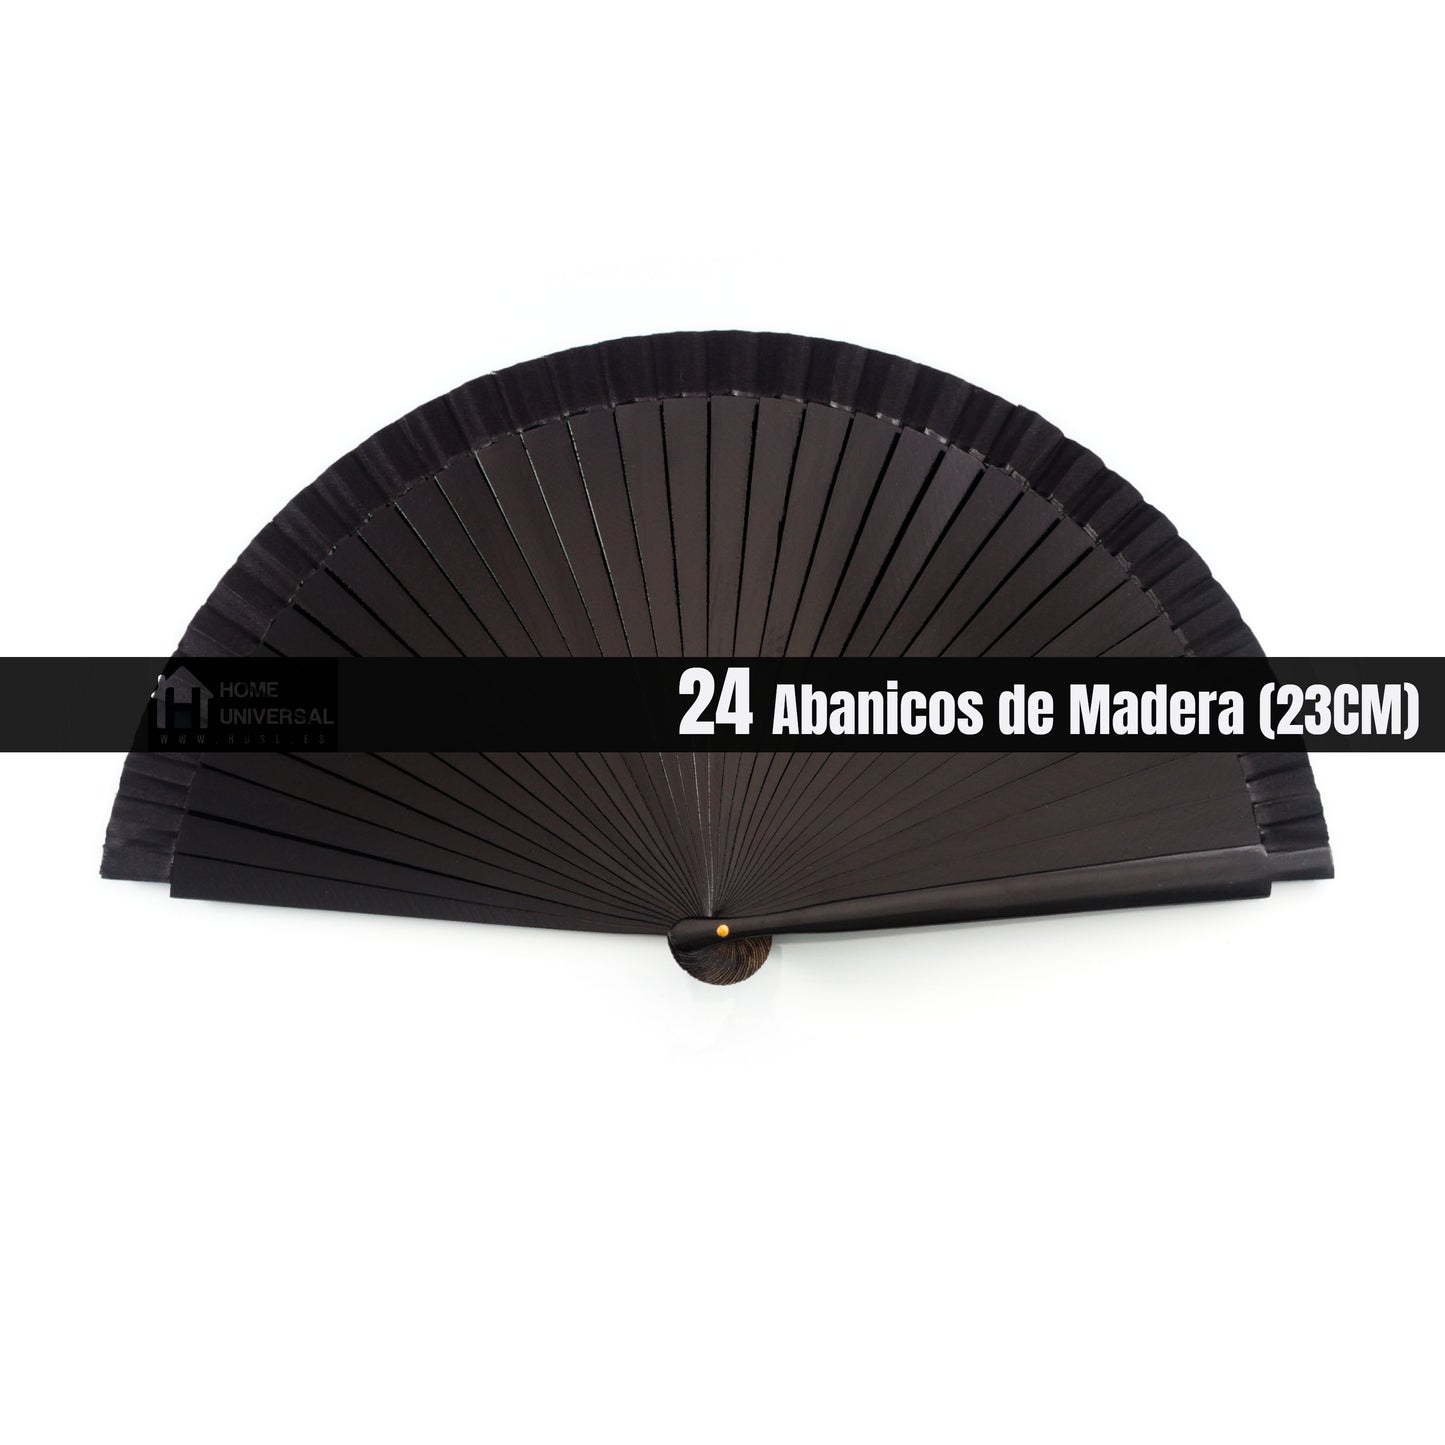 HOME UNIVERSAL Abanicos Madera Liso 23CM, Detalles para los Invitados, Regalos de Boda, Fiesta, Comunión o Bautizo (23cm_Negro)